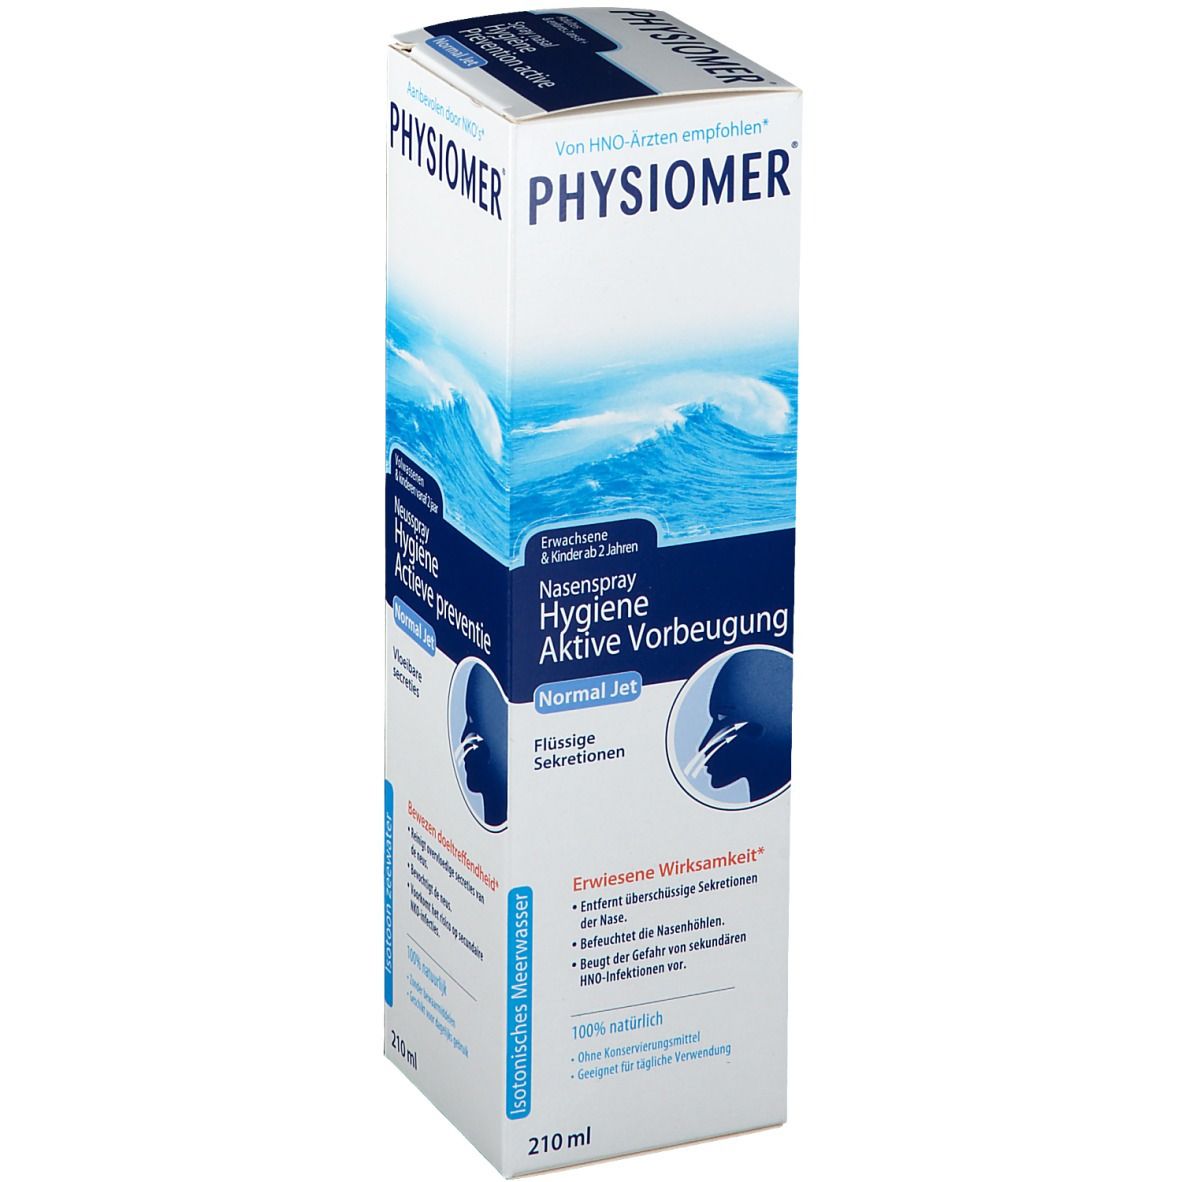 Physiomer Normal Jet 210ml - Pazzox, pharmacie en ligne pas de soucis